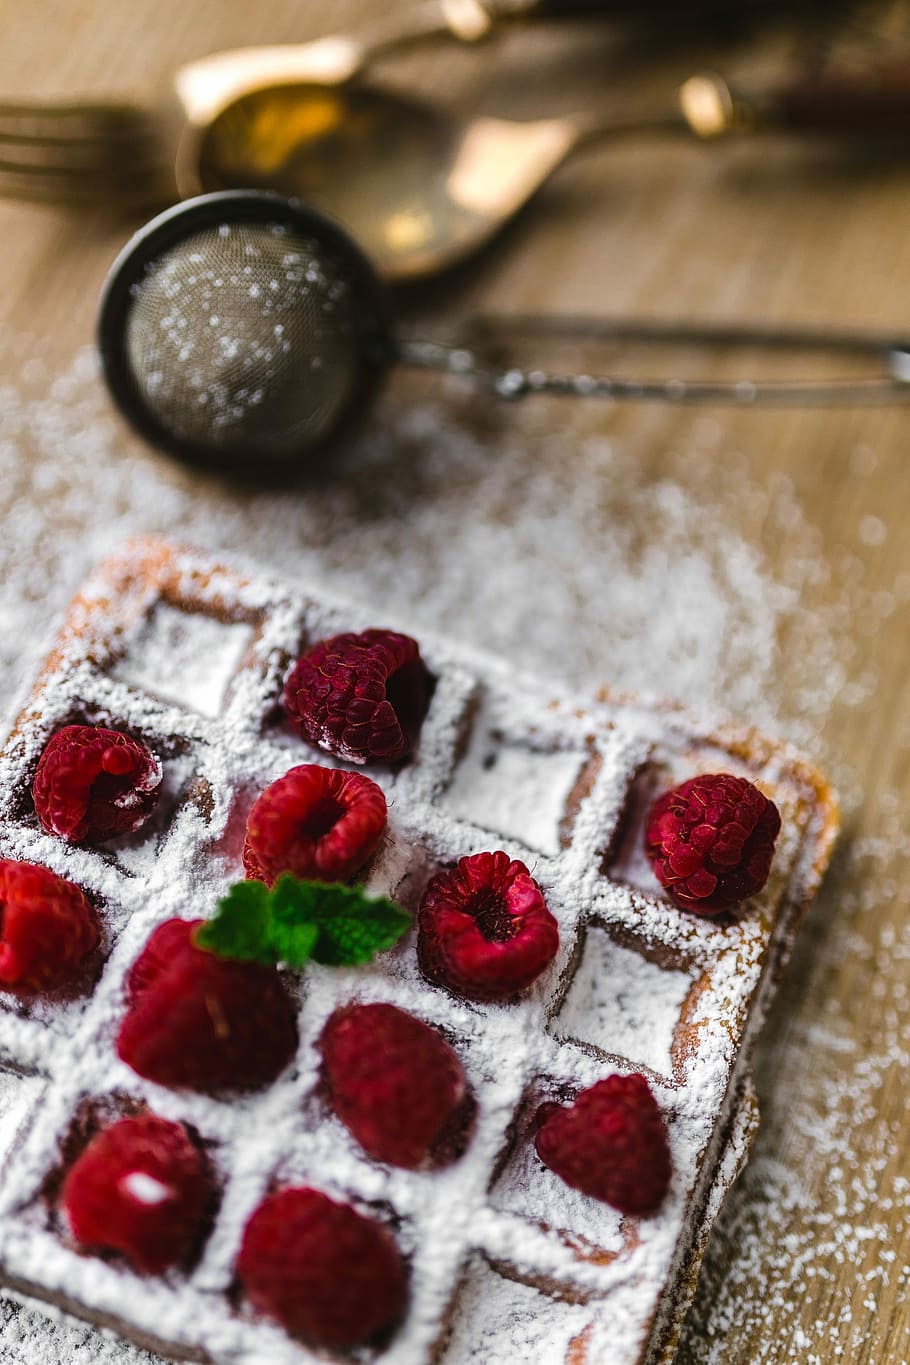 Breakfast waffles with fresh raspberries and powdered sugar, fruit